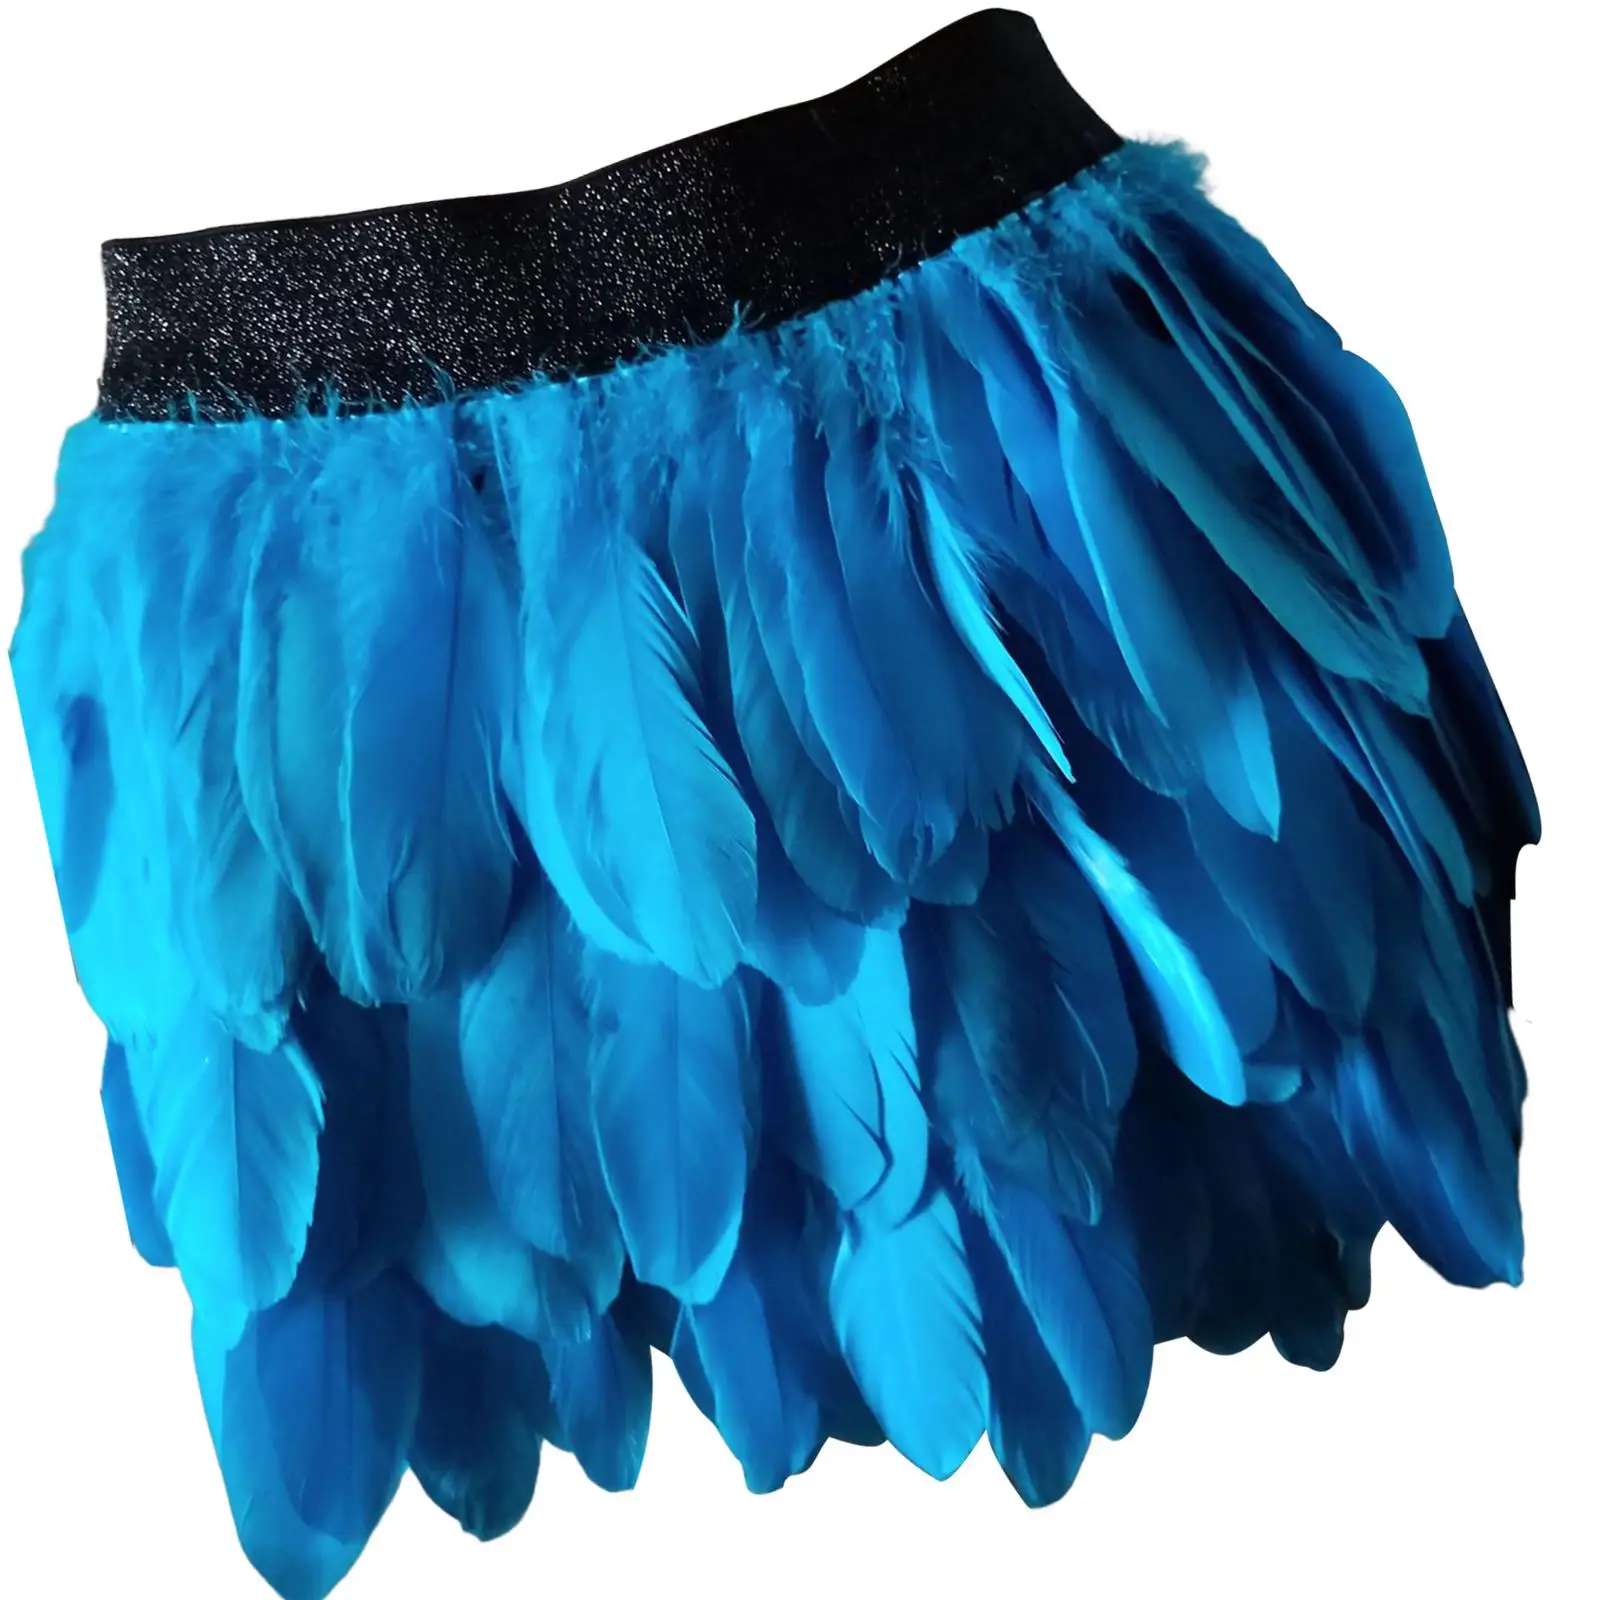 Mini Feathers Skirt Women Short Skirt Adjustable Waist Elastic Fringe Fashion Casual Dance for Festival Wedding